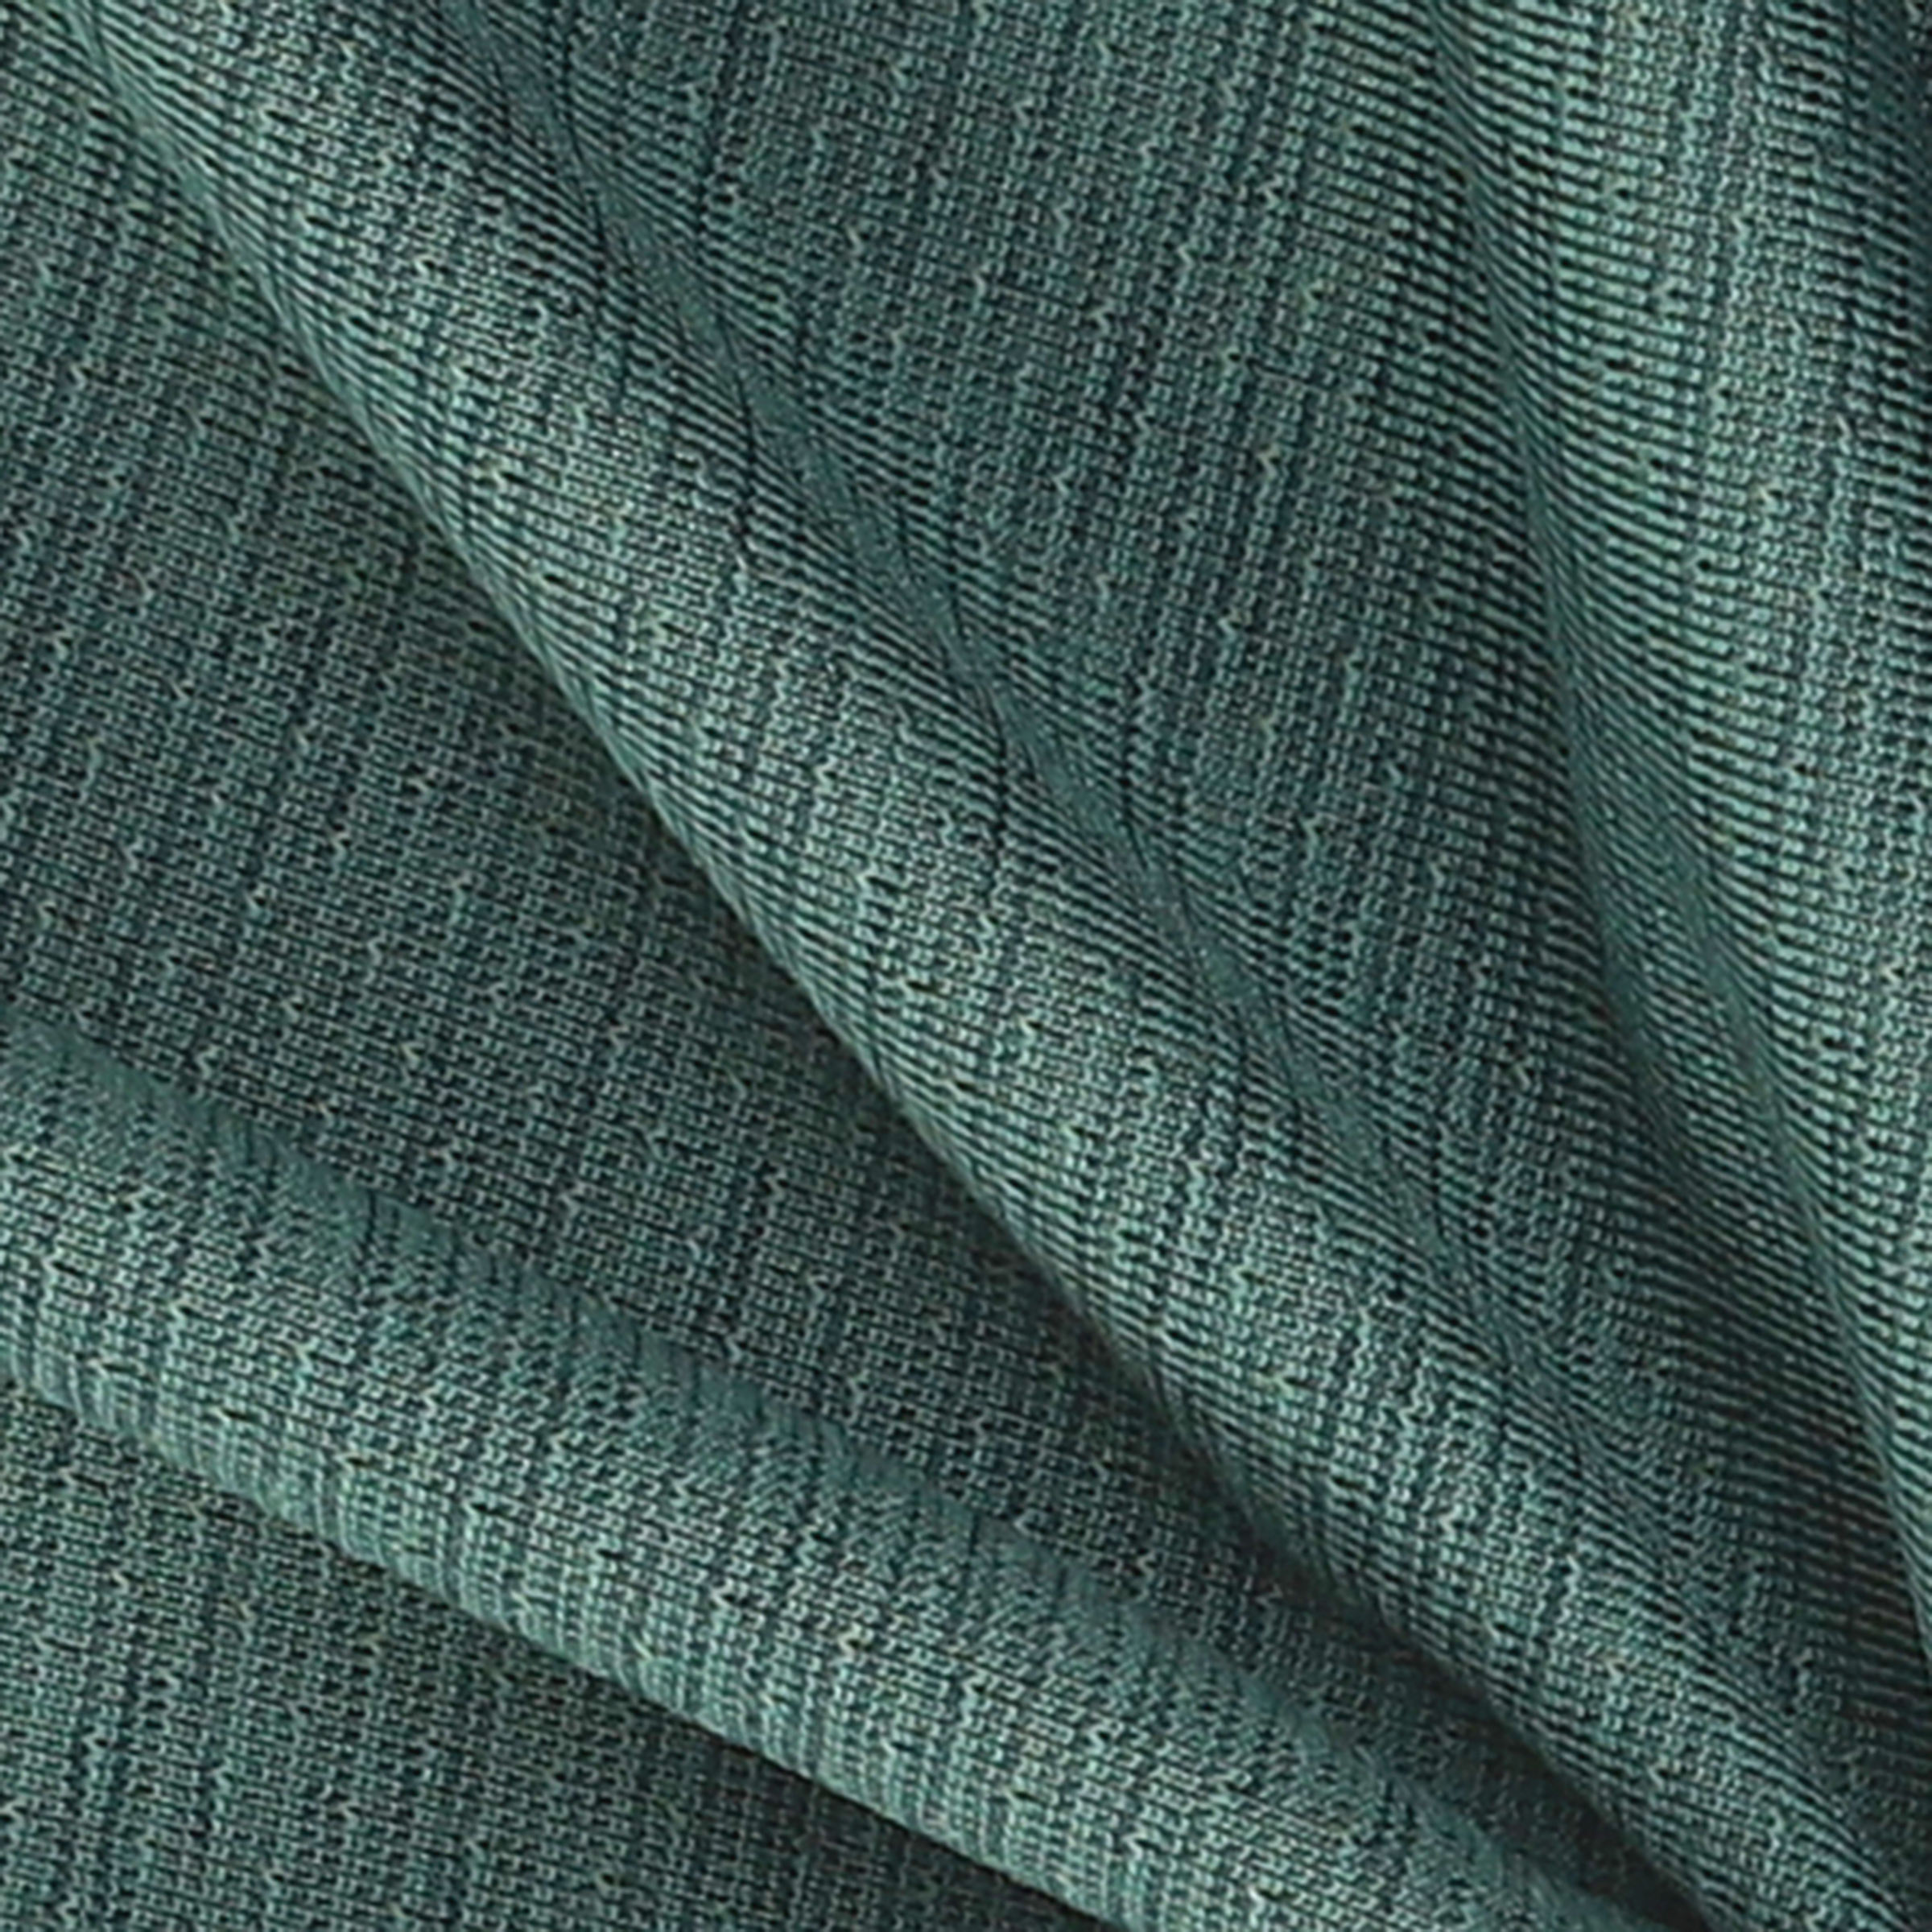 Pace Tank Pine close up fabric